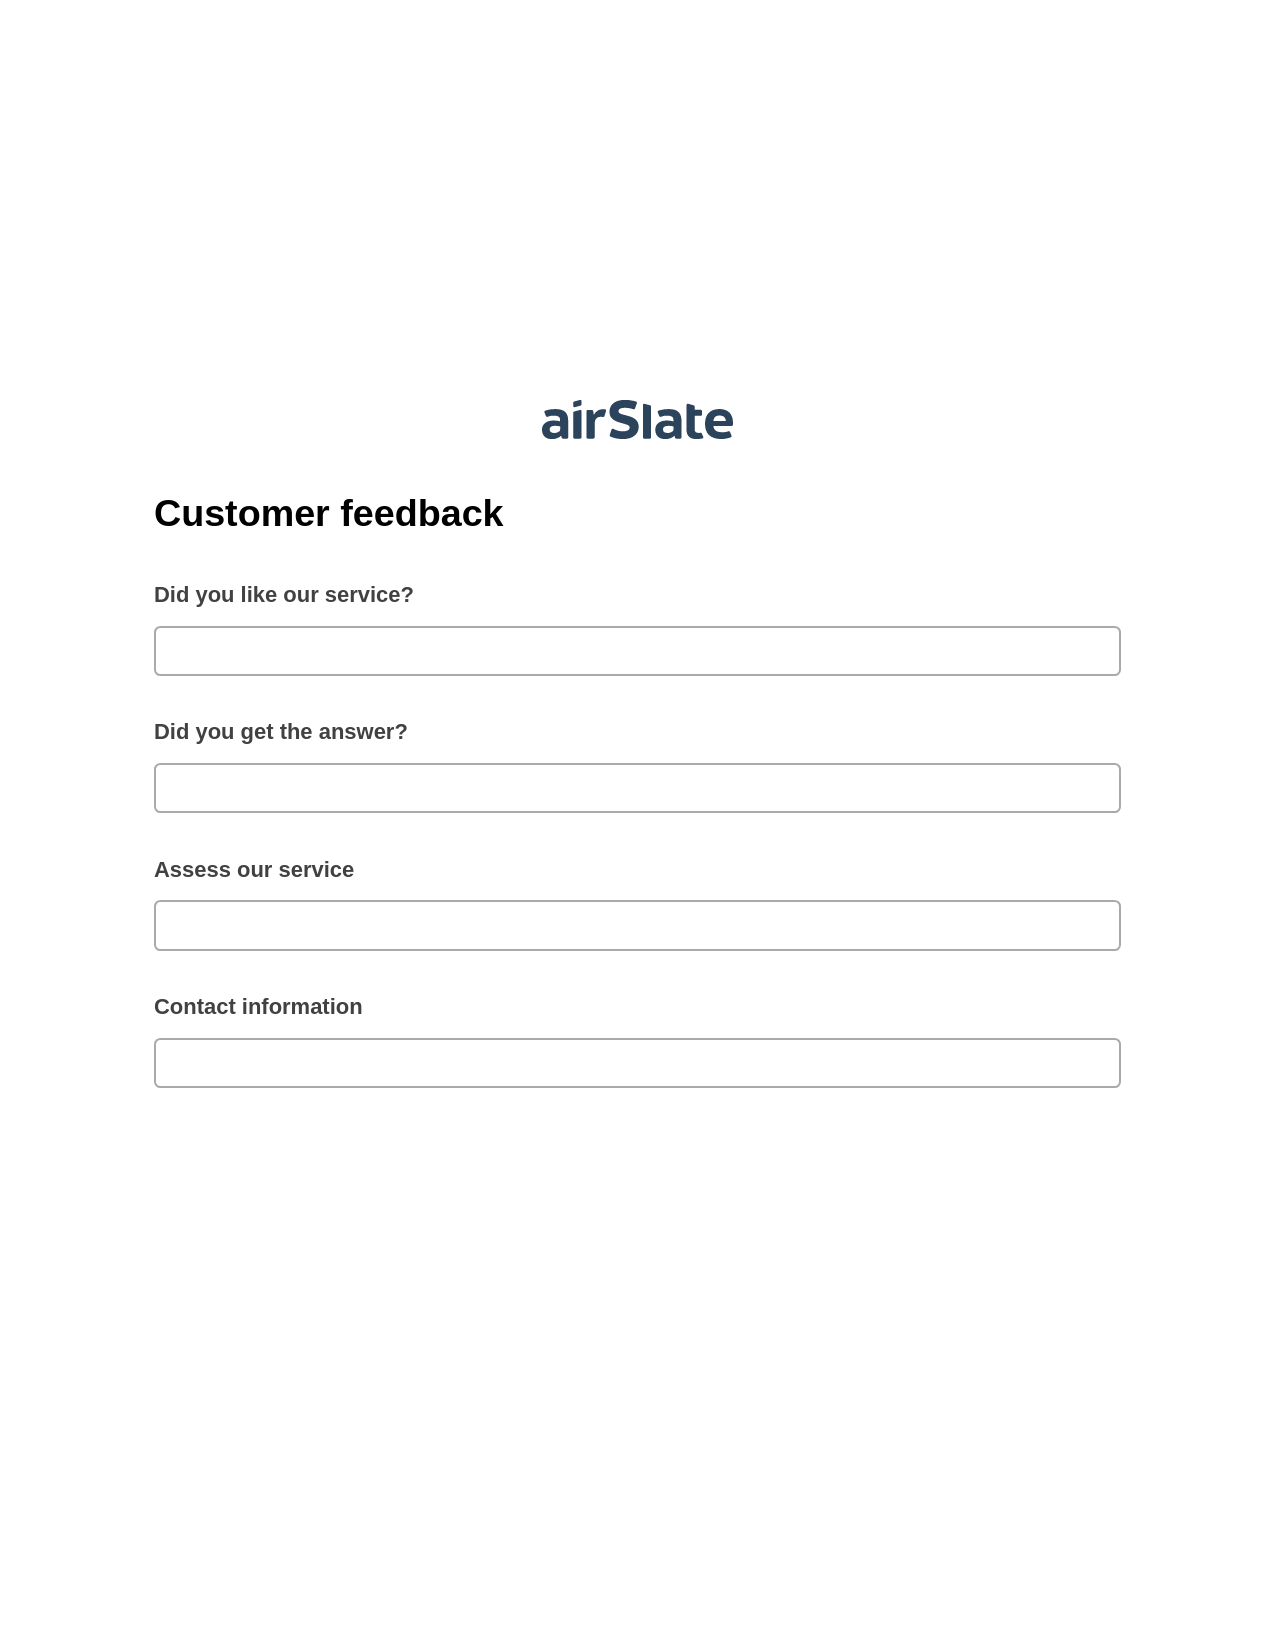 Multirole Customer feedback Pre-fill from Litmos bot, Update NetSuite Record Bot, Export to Smartsheet